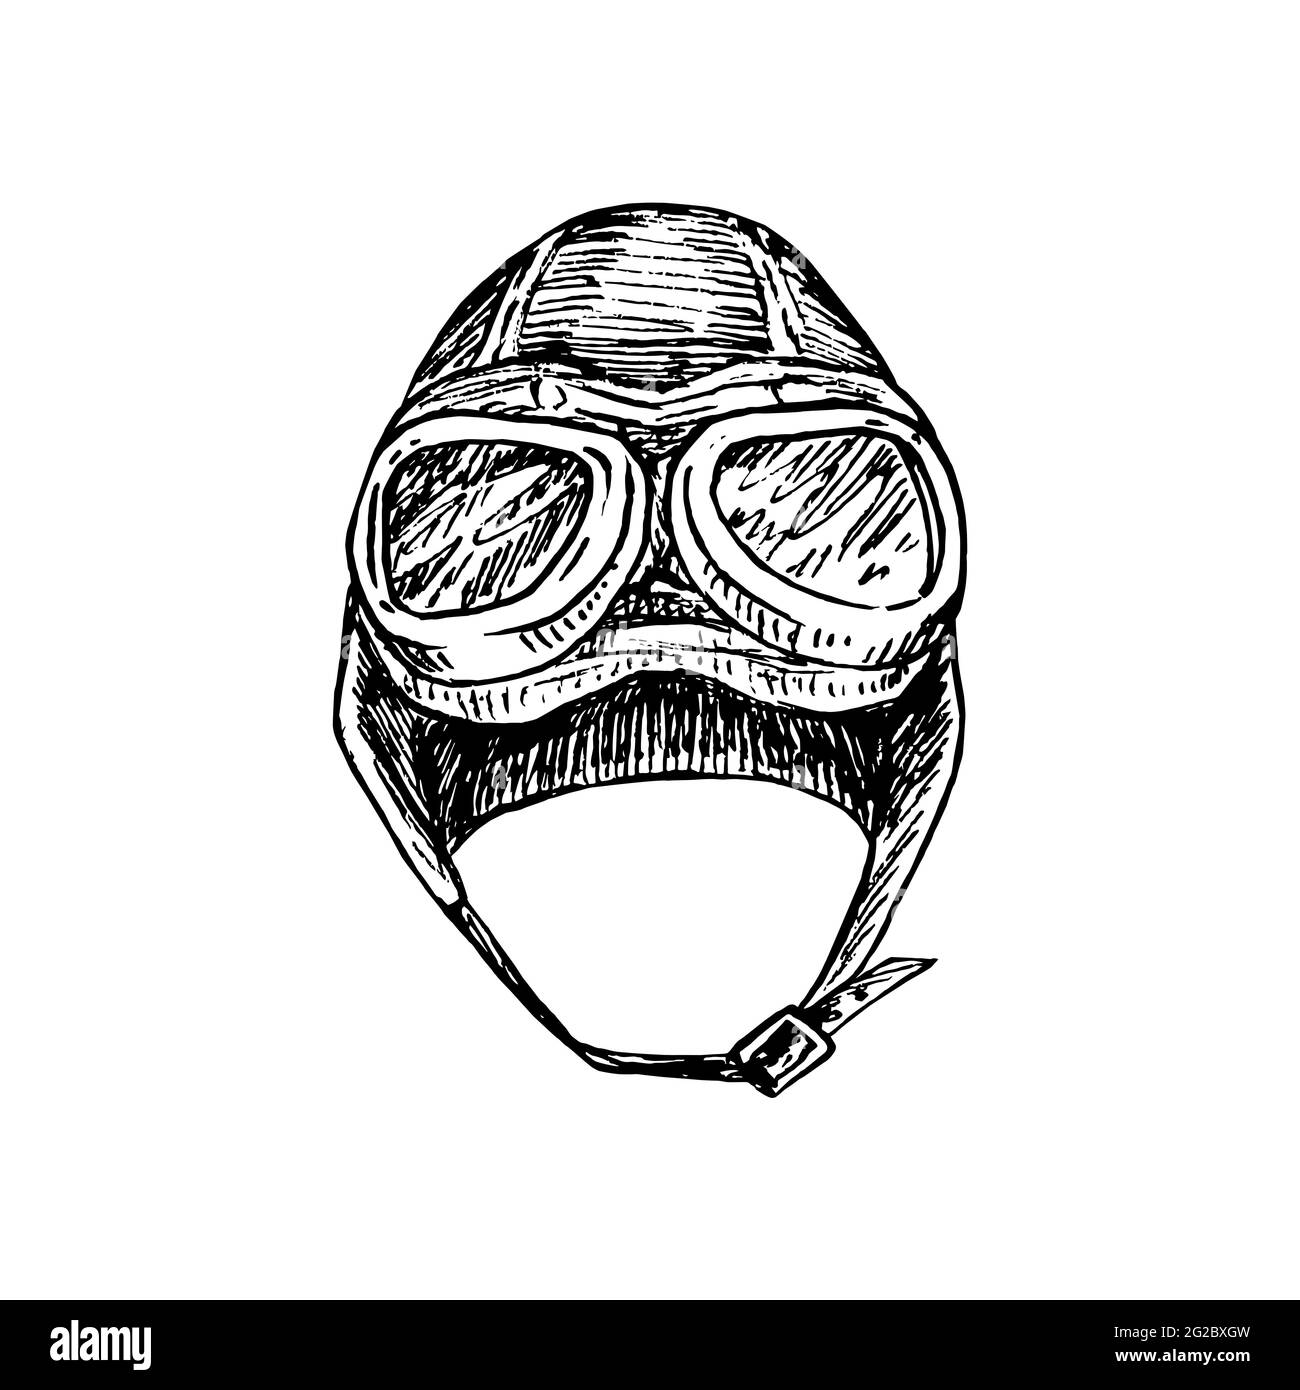 Retro flight helmet,  gravure style ink drawing illustration isolated on white Stock Photo